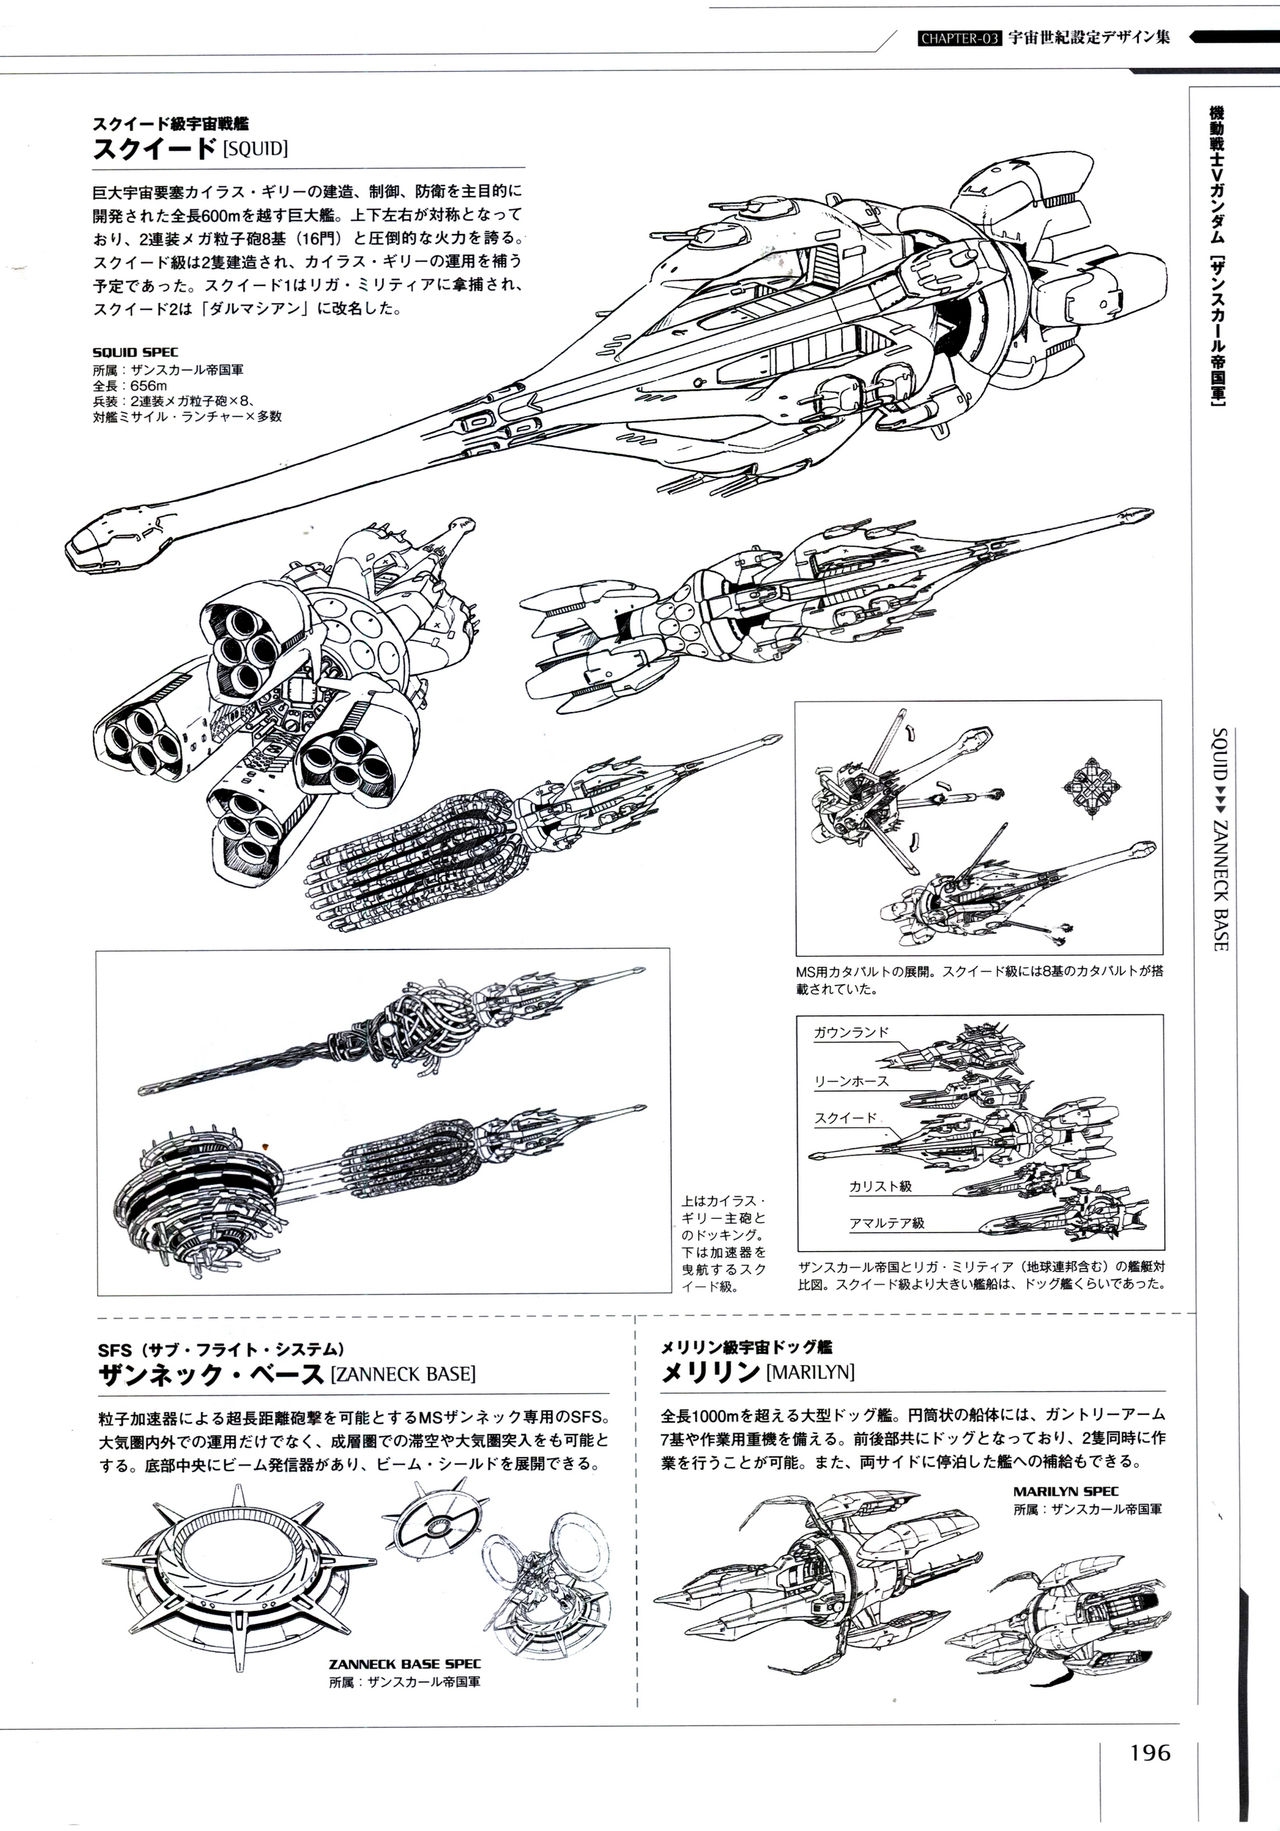 Mobile Suit Gundam - Ship & Aerospace Plane Encyclopedia - Revised Edition 201